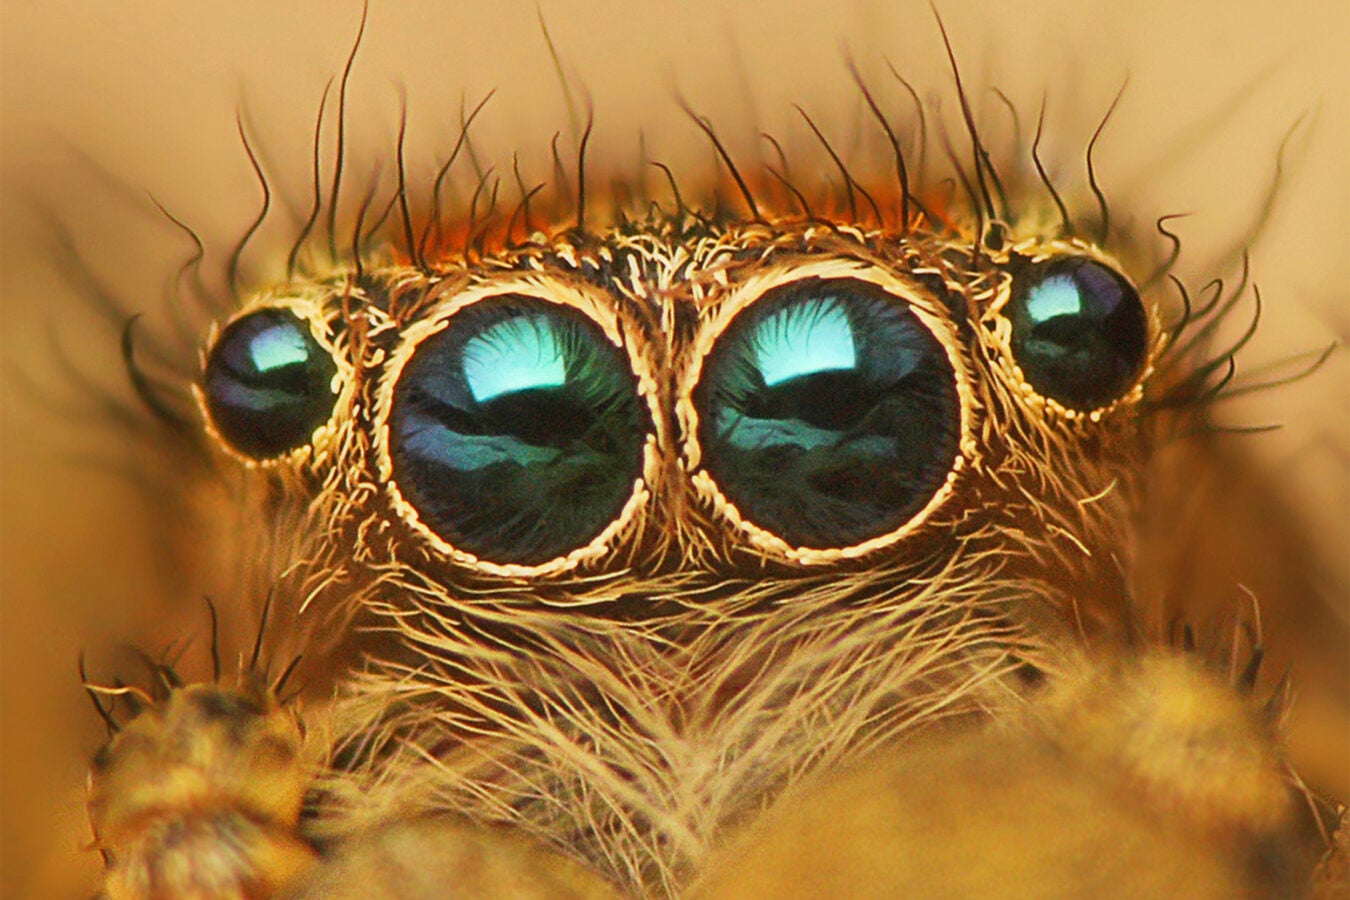 Spider eyes up close.